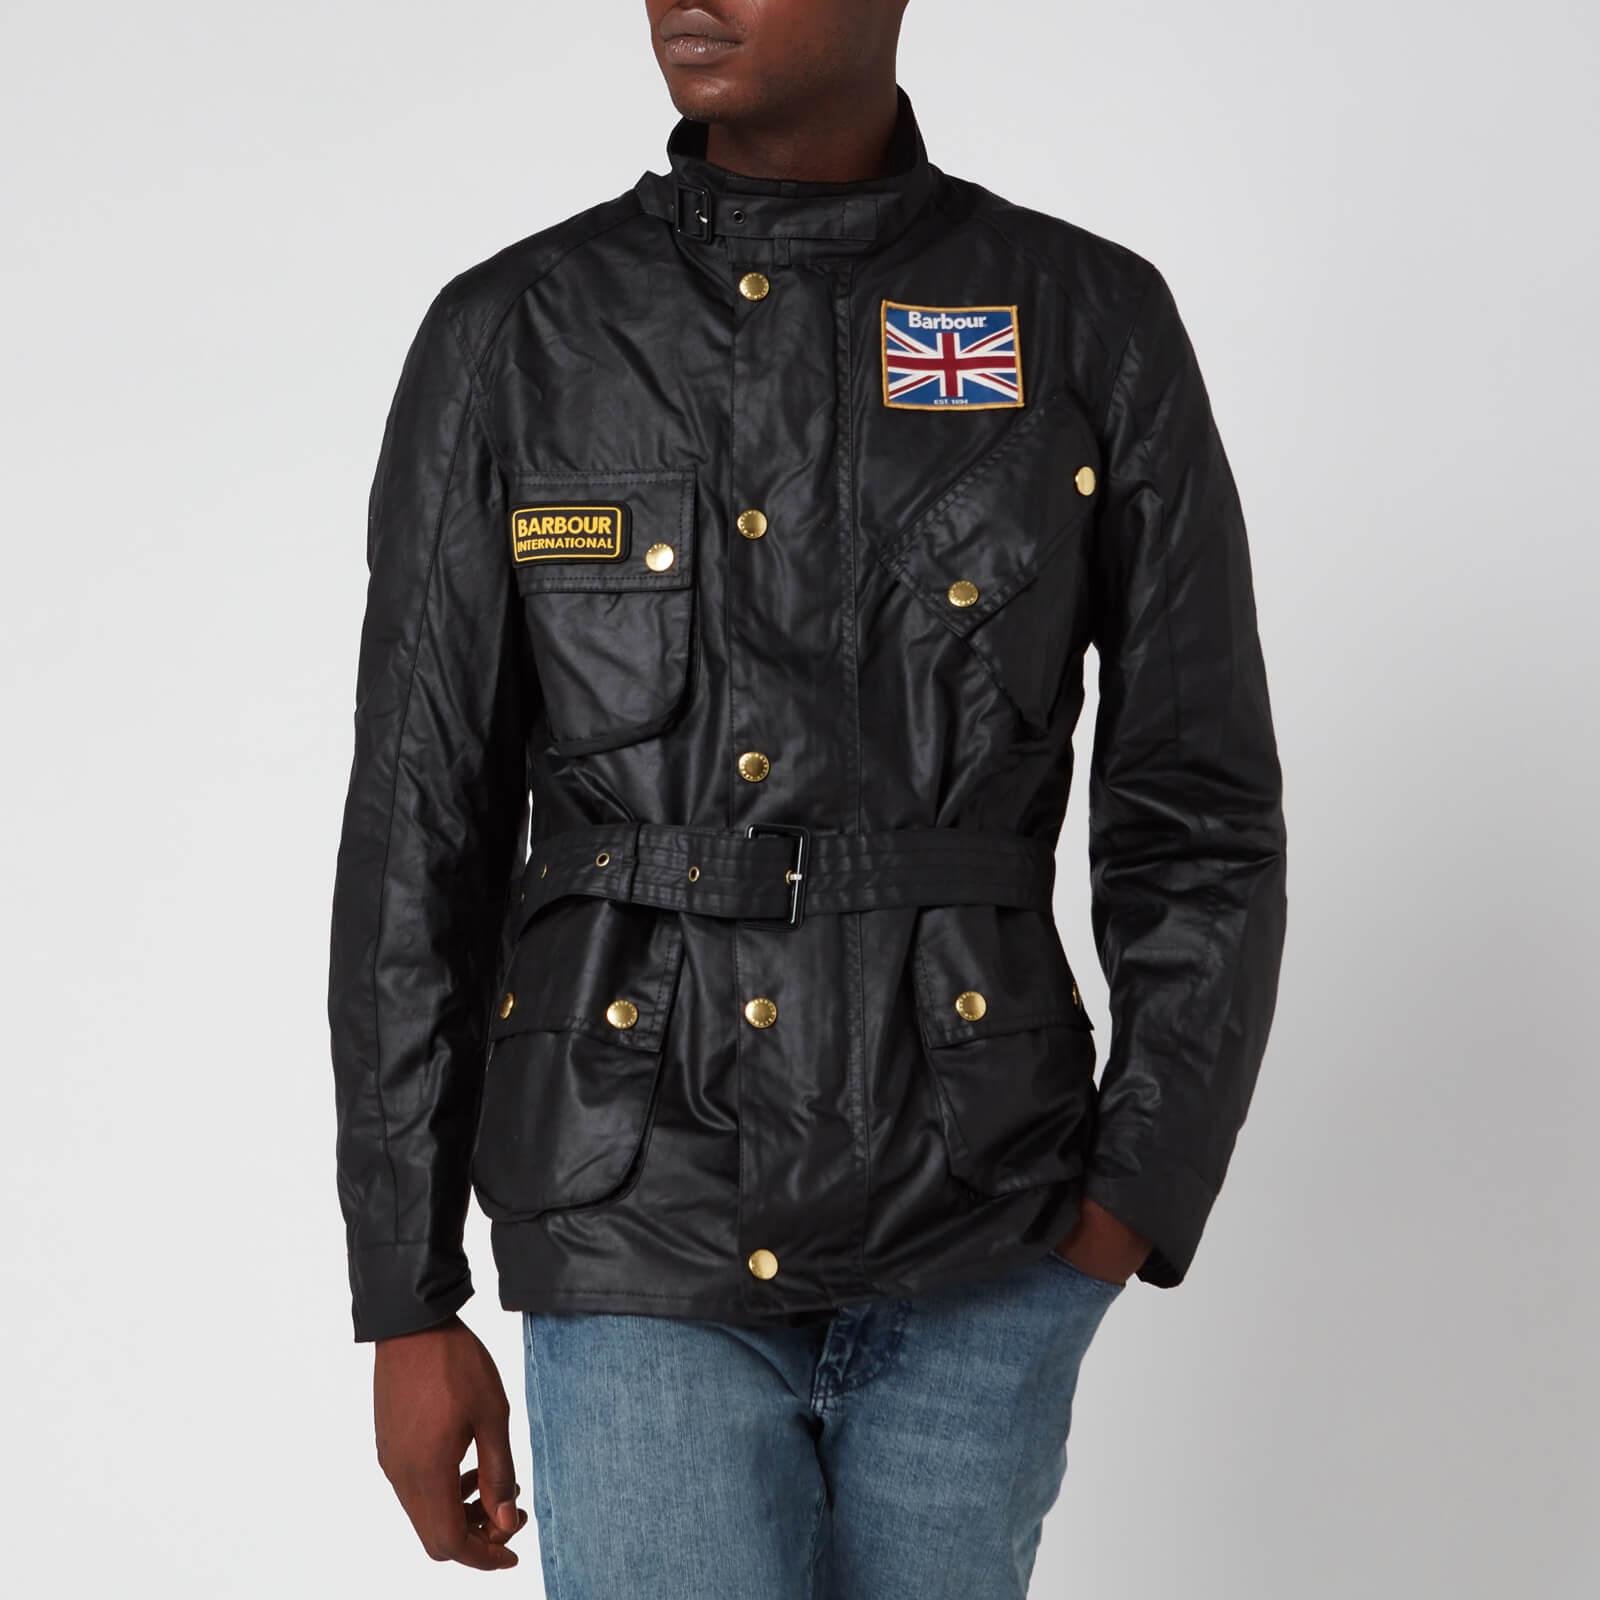 Barbour Men's Union Jack International Coat in Black for Men - Save 26% |  Lyst